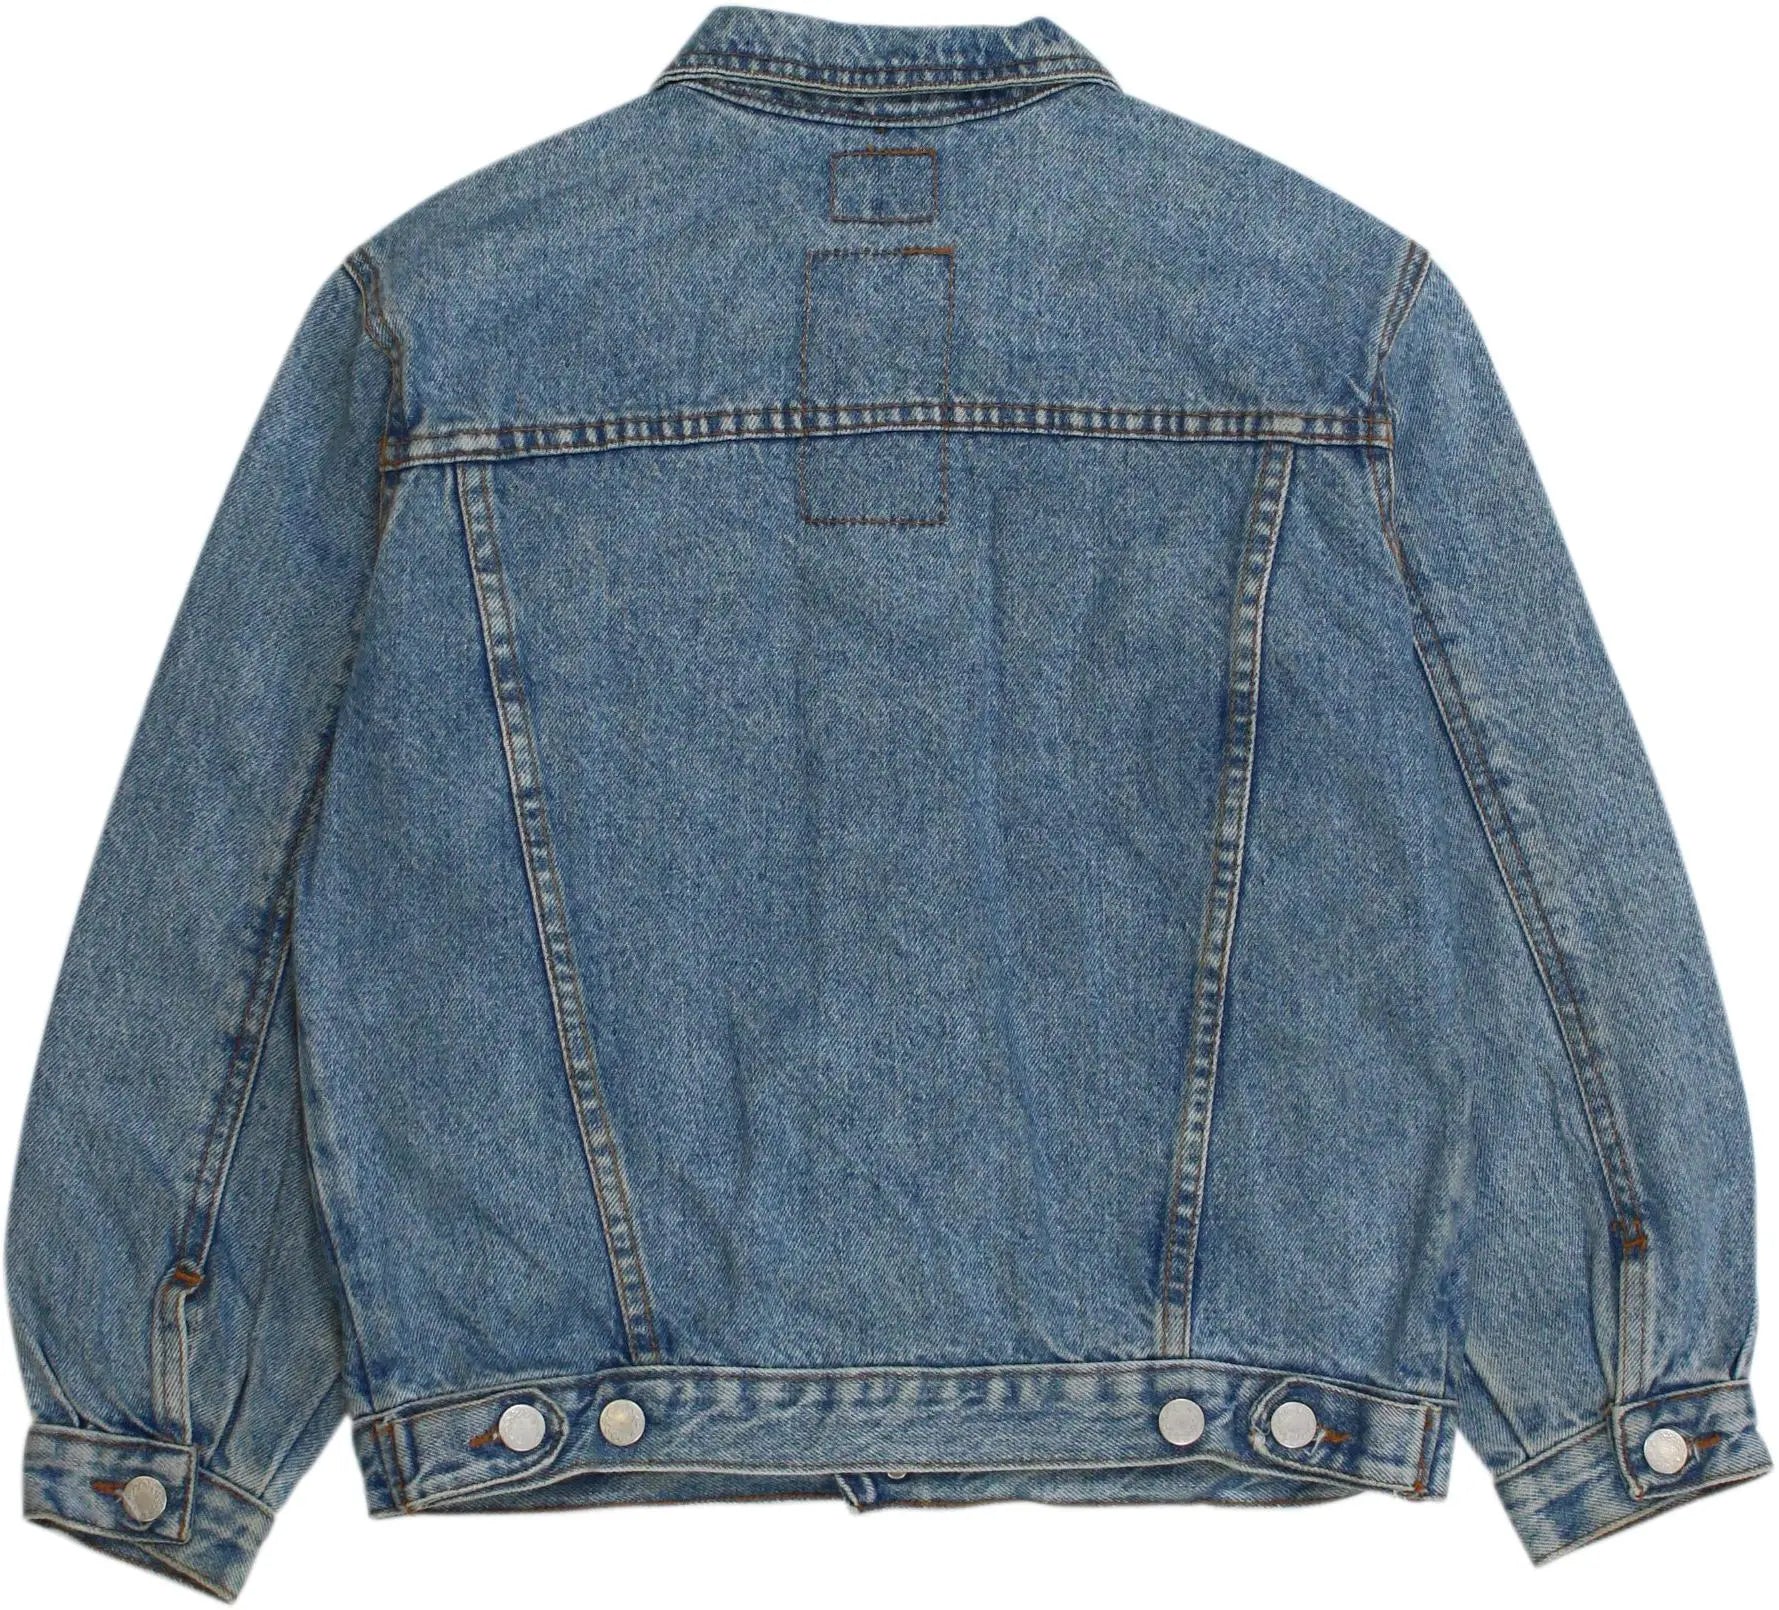 Bimbi Quotidiani - Vintage Denim Jacket by Bimbi Quotidiani- ThriftTale.com - Vintage and second handclothing